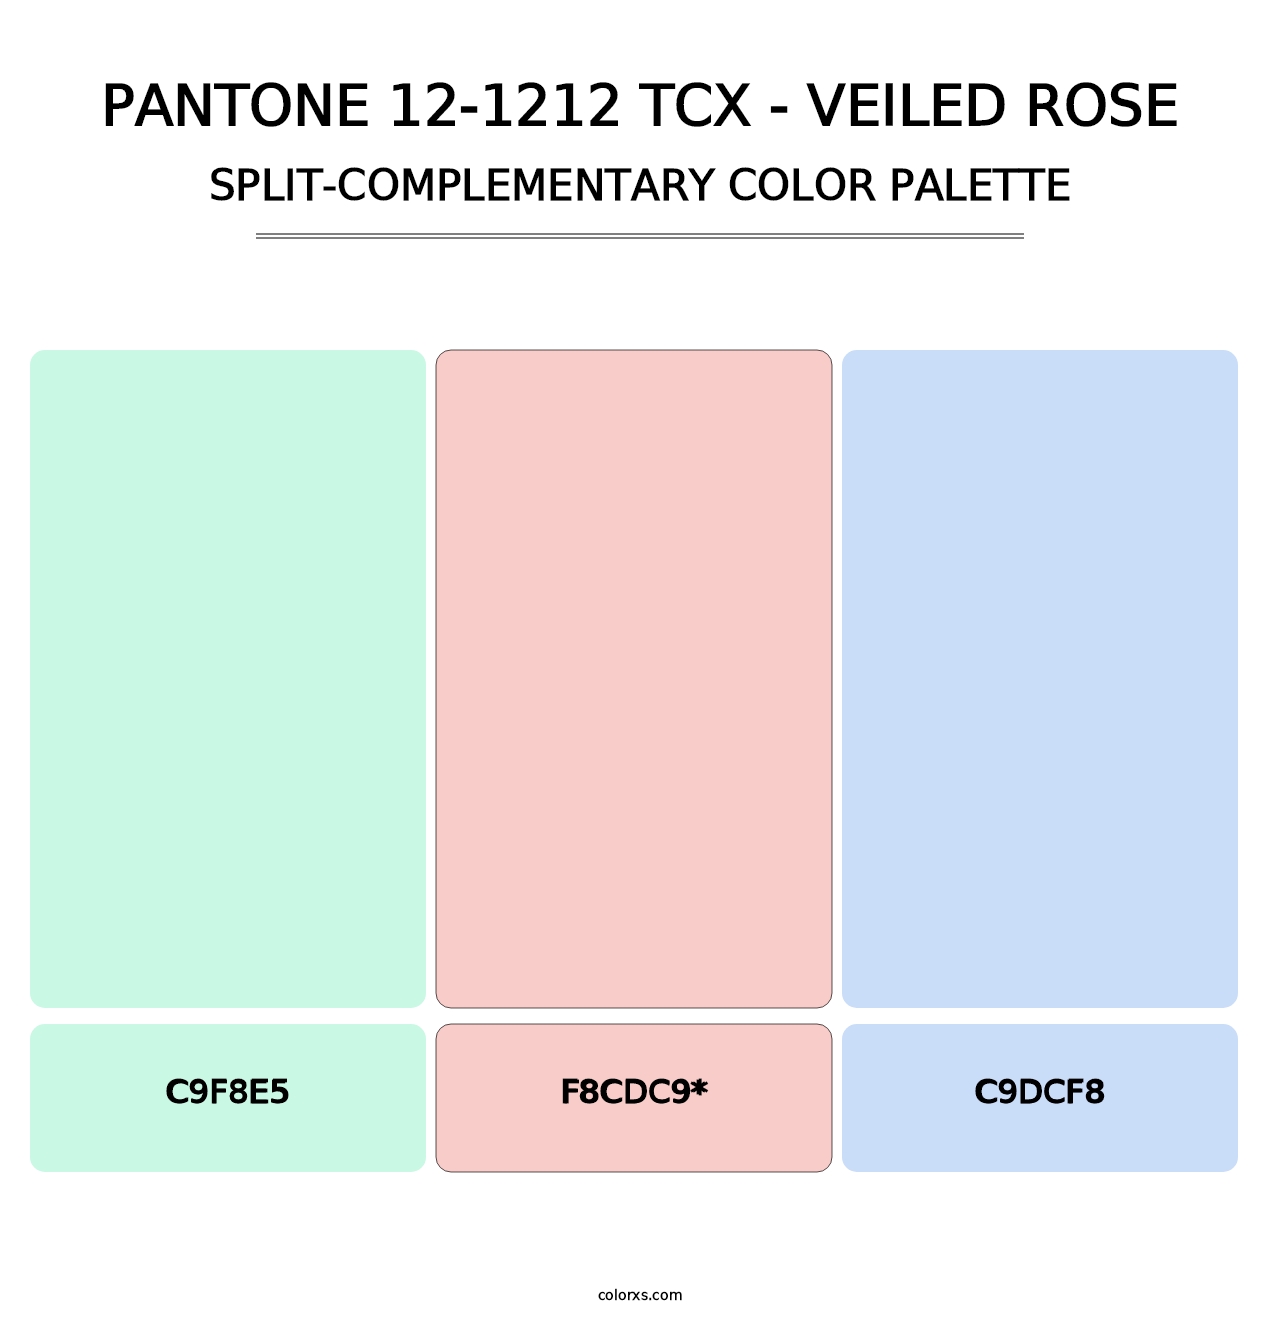 PANTONE 12-1212 TCX - Veiled Rose - Split-Complementary Color Palette